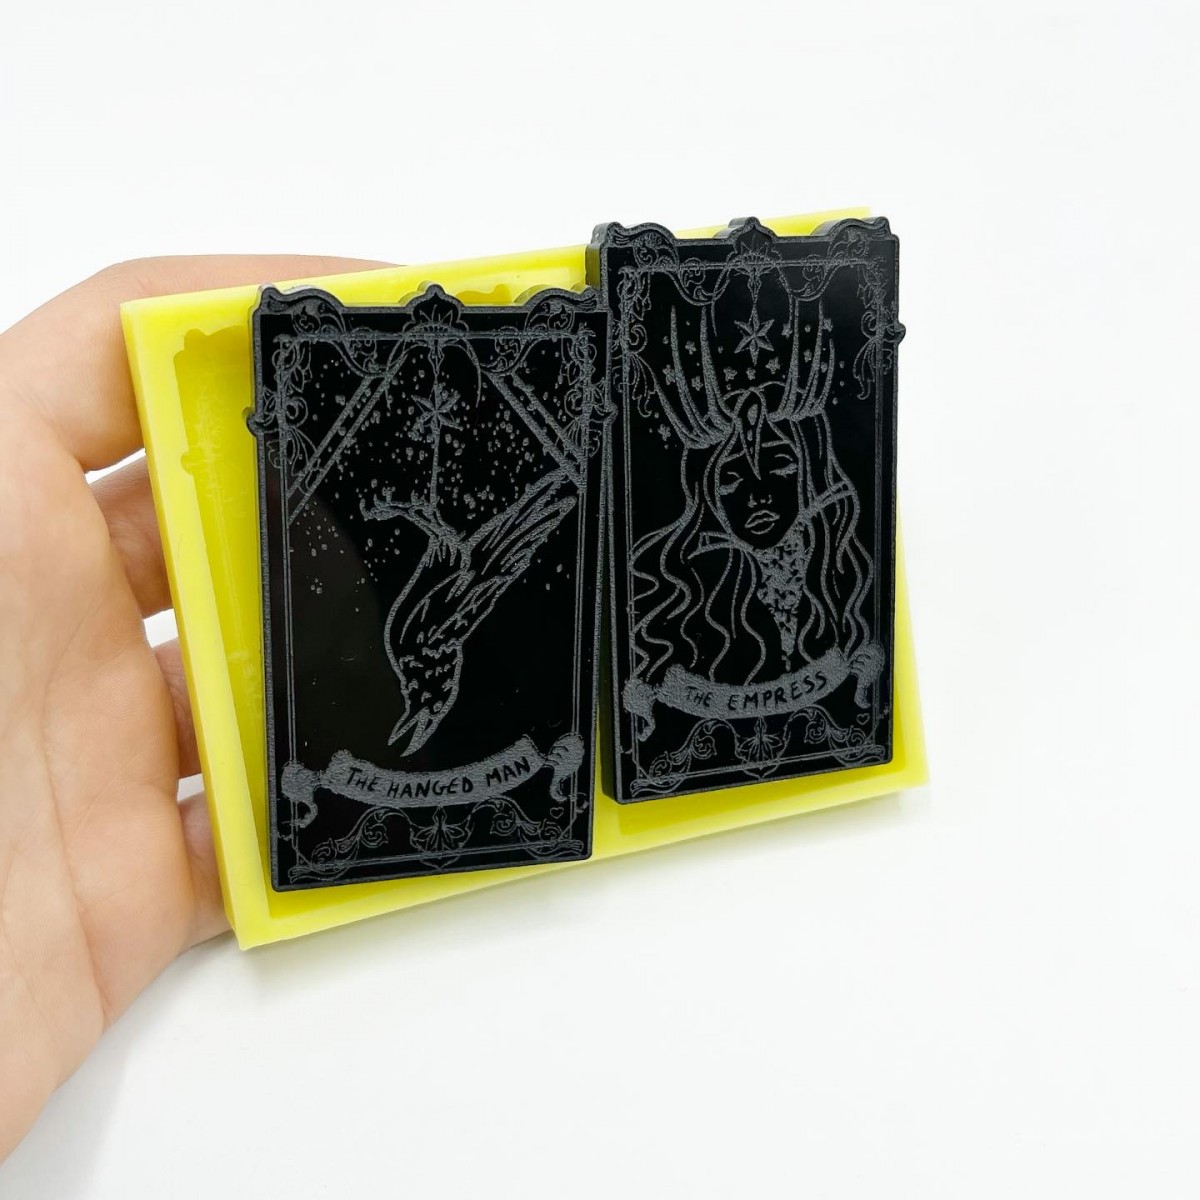 Set of "The Hanged Man" and "The Empress" Tarot Cards Mold - medium size